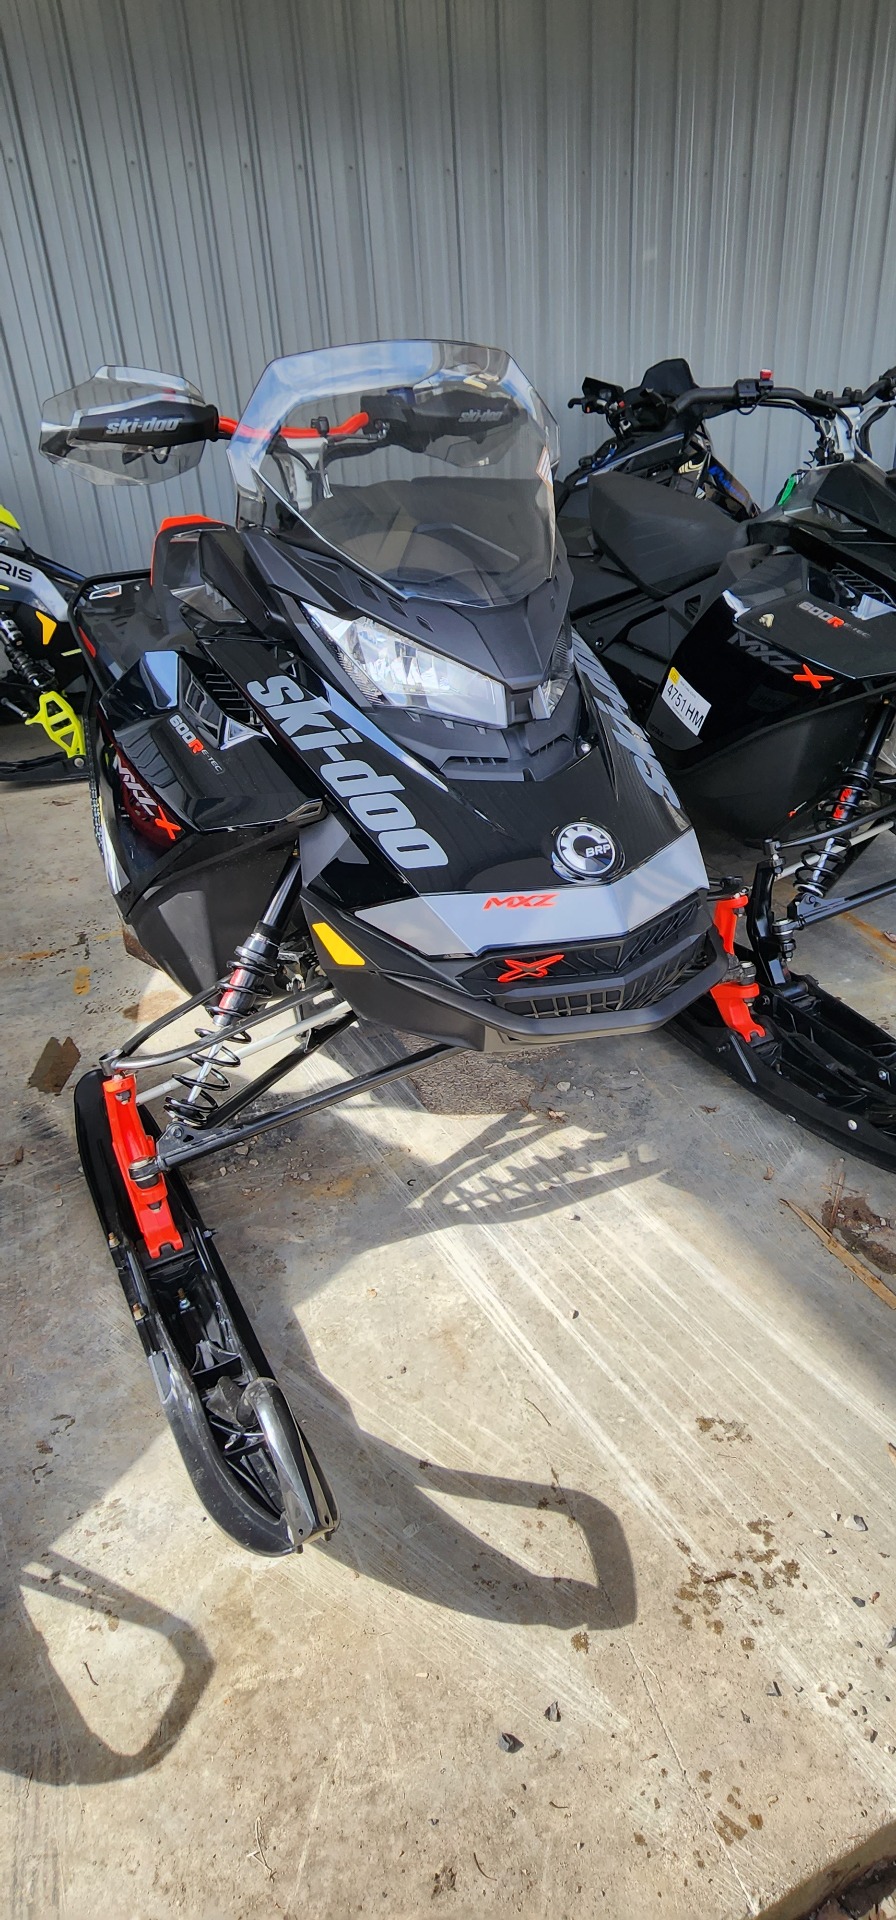 2020 Ski-Doo MXZ 600 X in Phoenix, New York - Photo 1